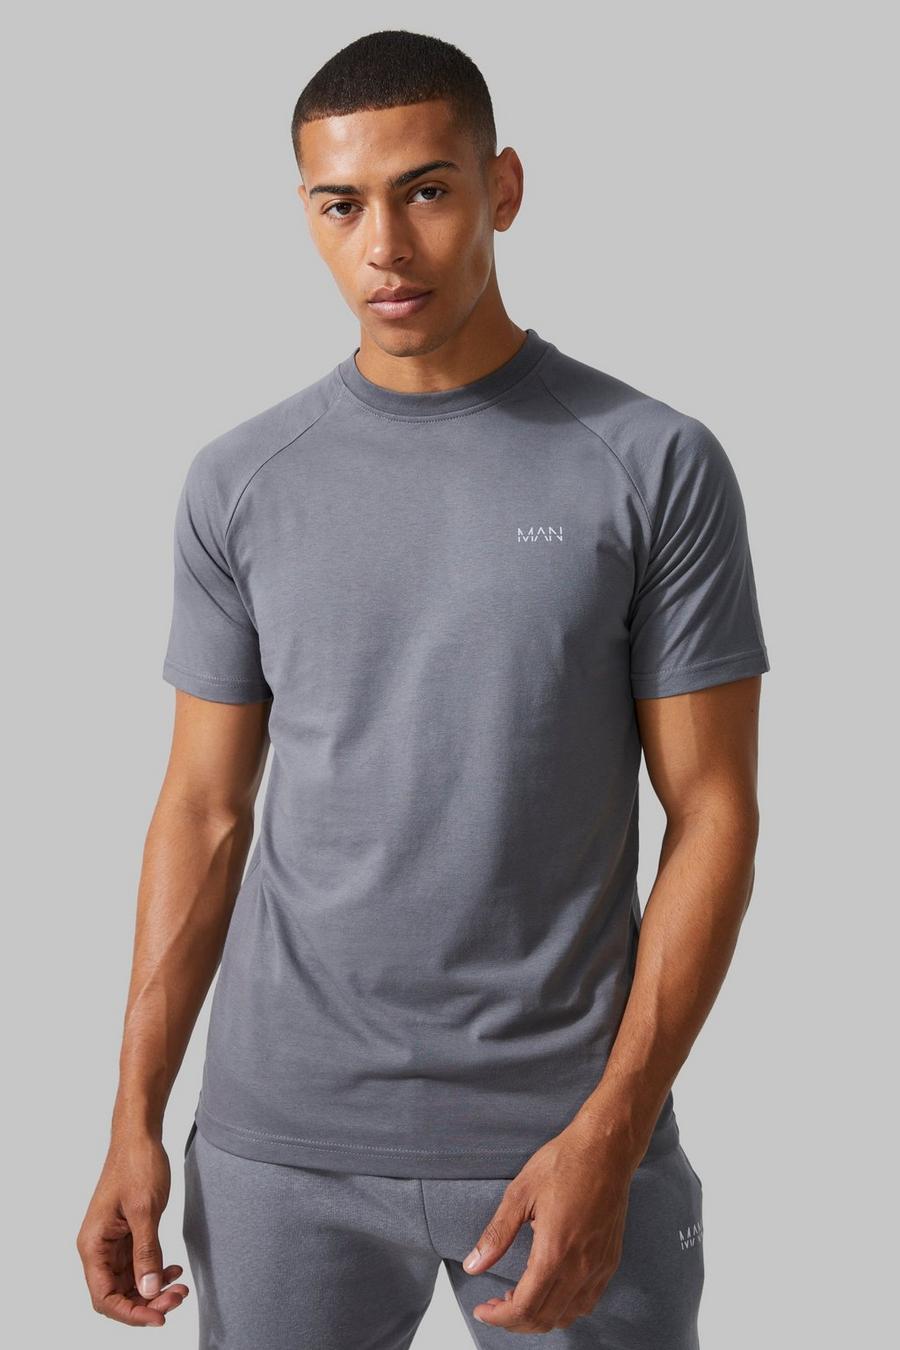 Charcoal gris Man Active Raglan Fitness T-Shirt